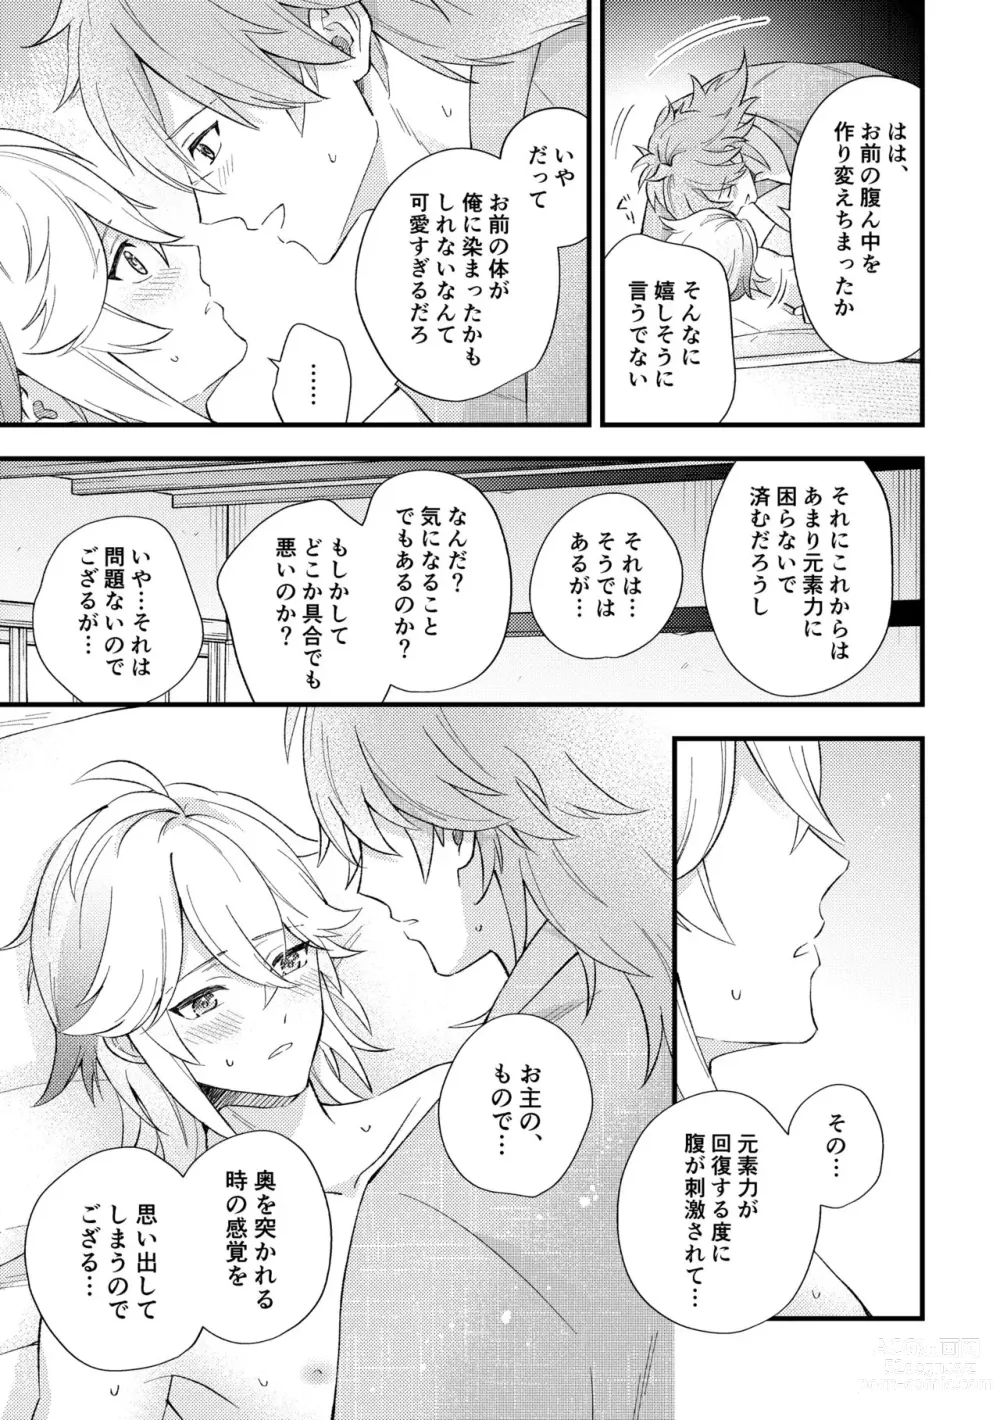 Page 5 of doujinshi C4